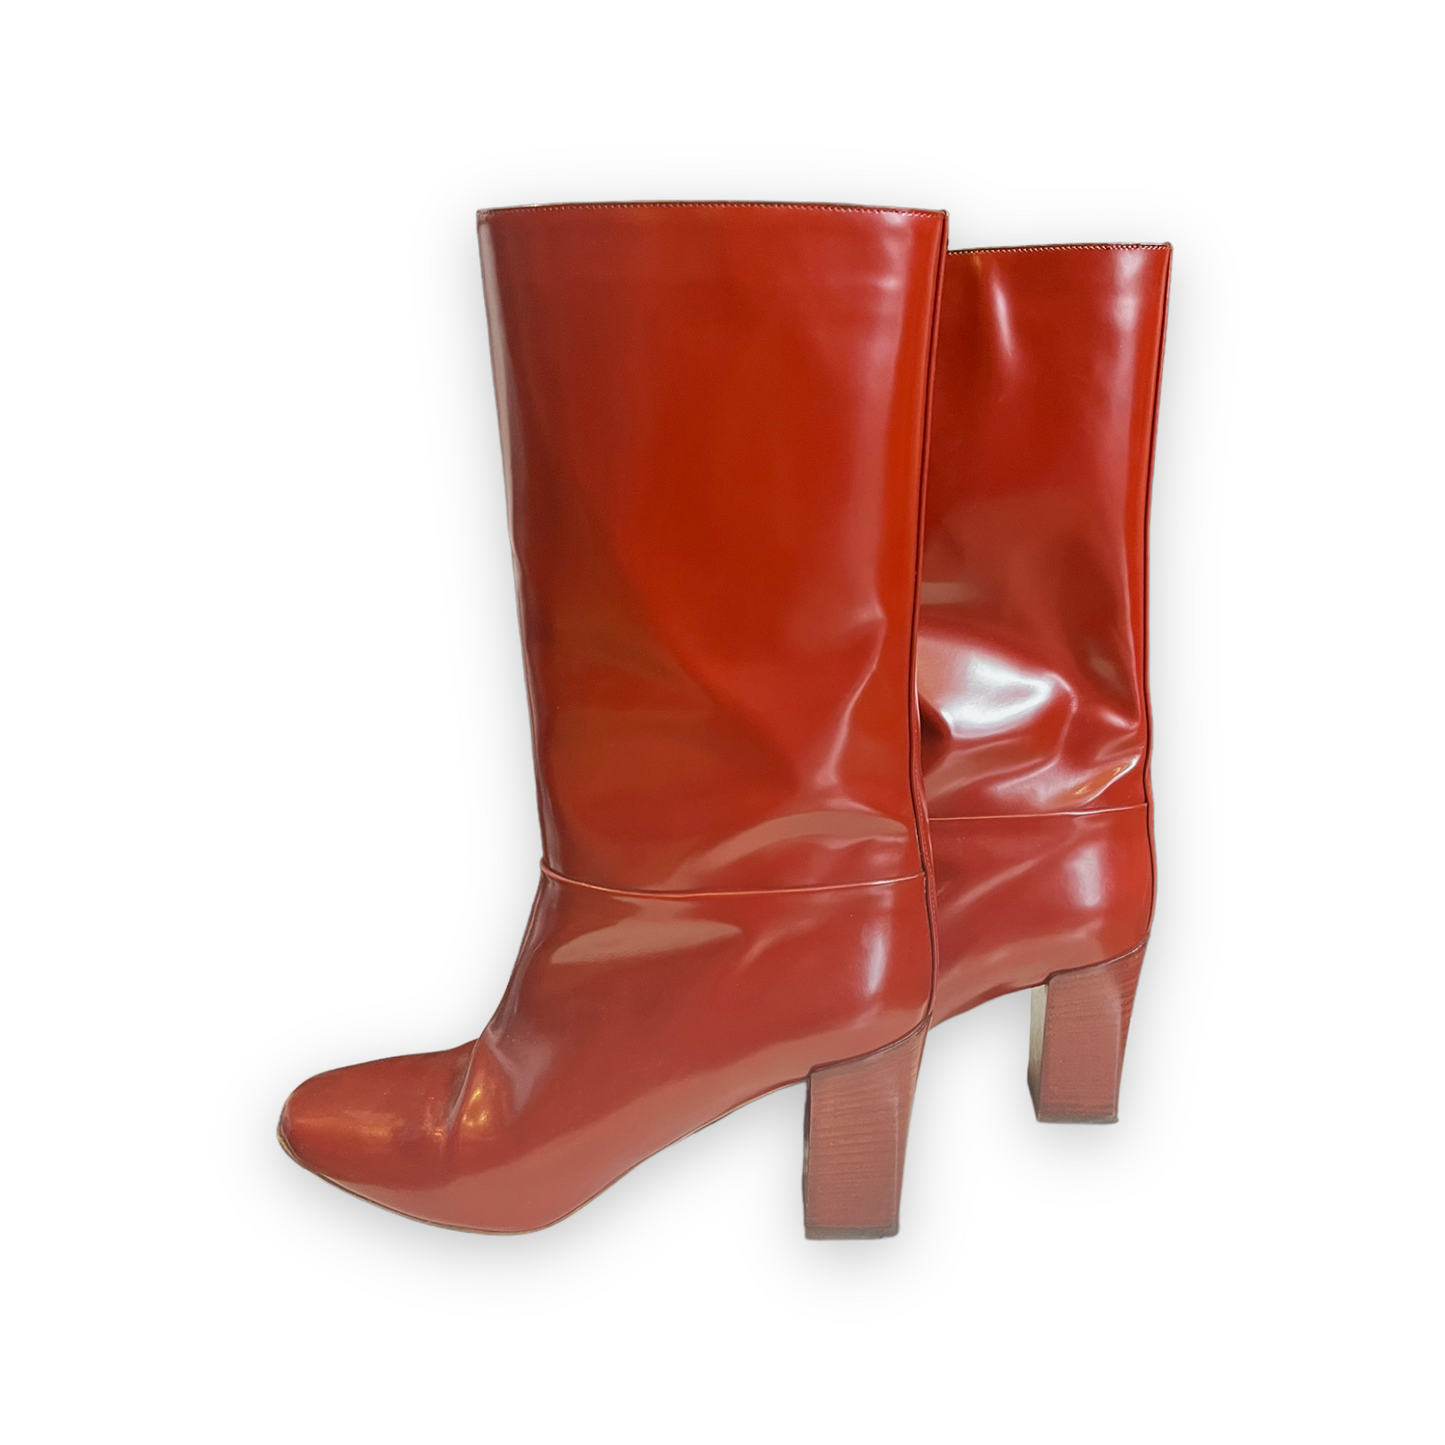 Chloe Brick Red Boots